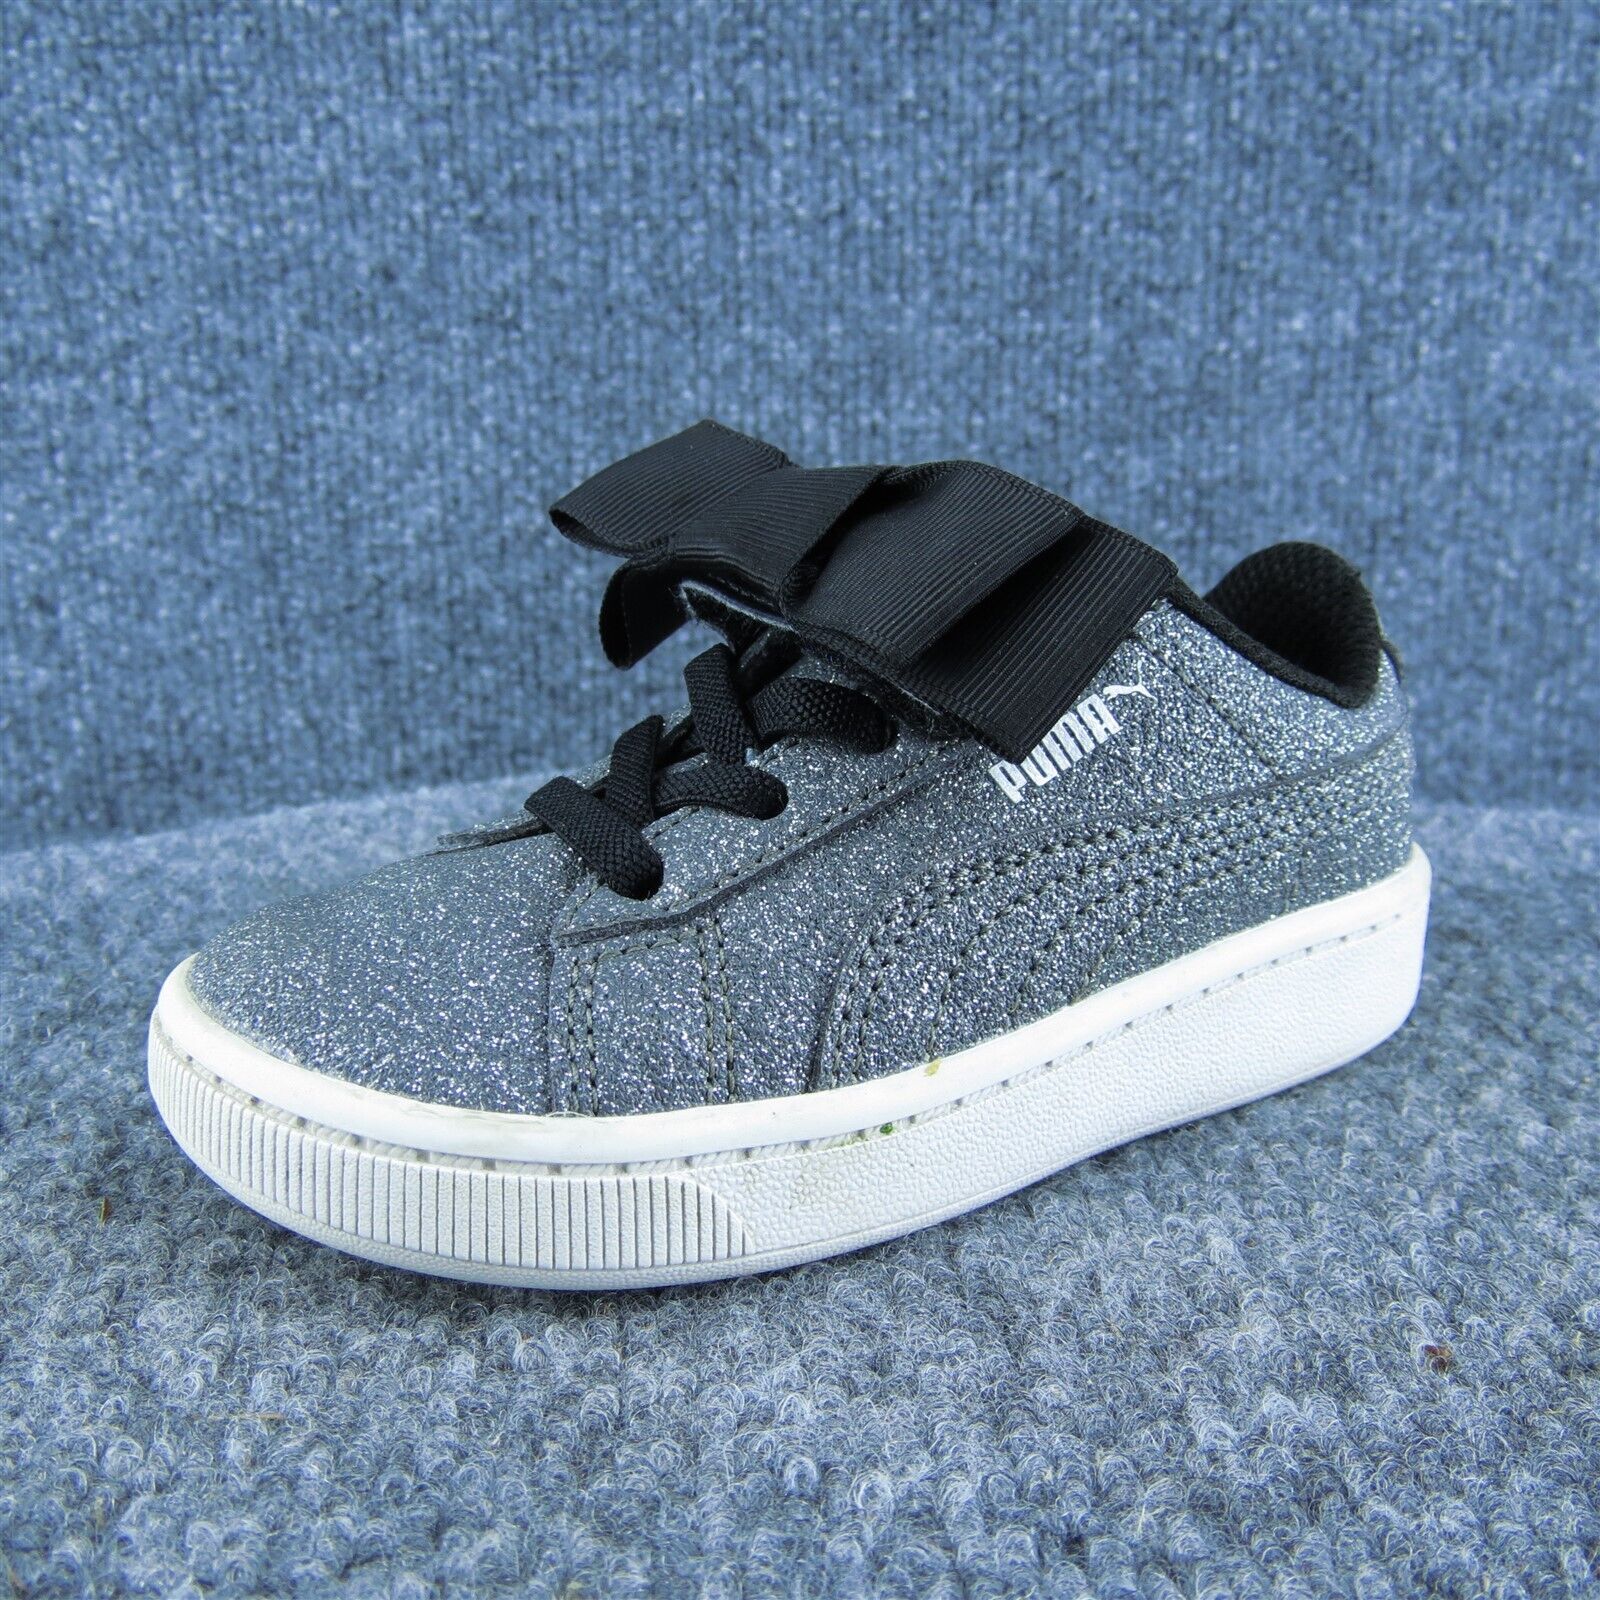 PUMA Girls Sneaker Shoes Silver Synthetic Hook & Loop Size T 7 Medium - $21.78